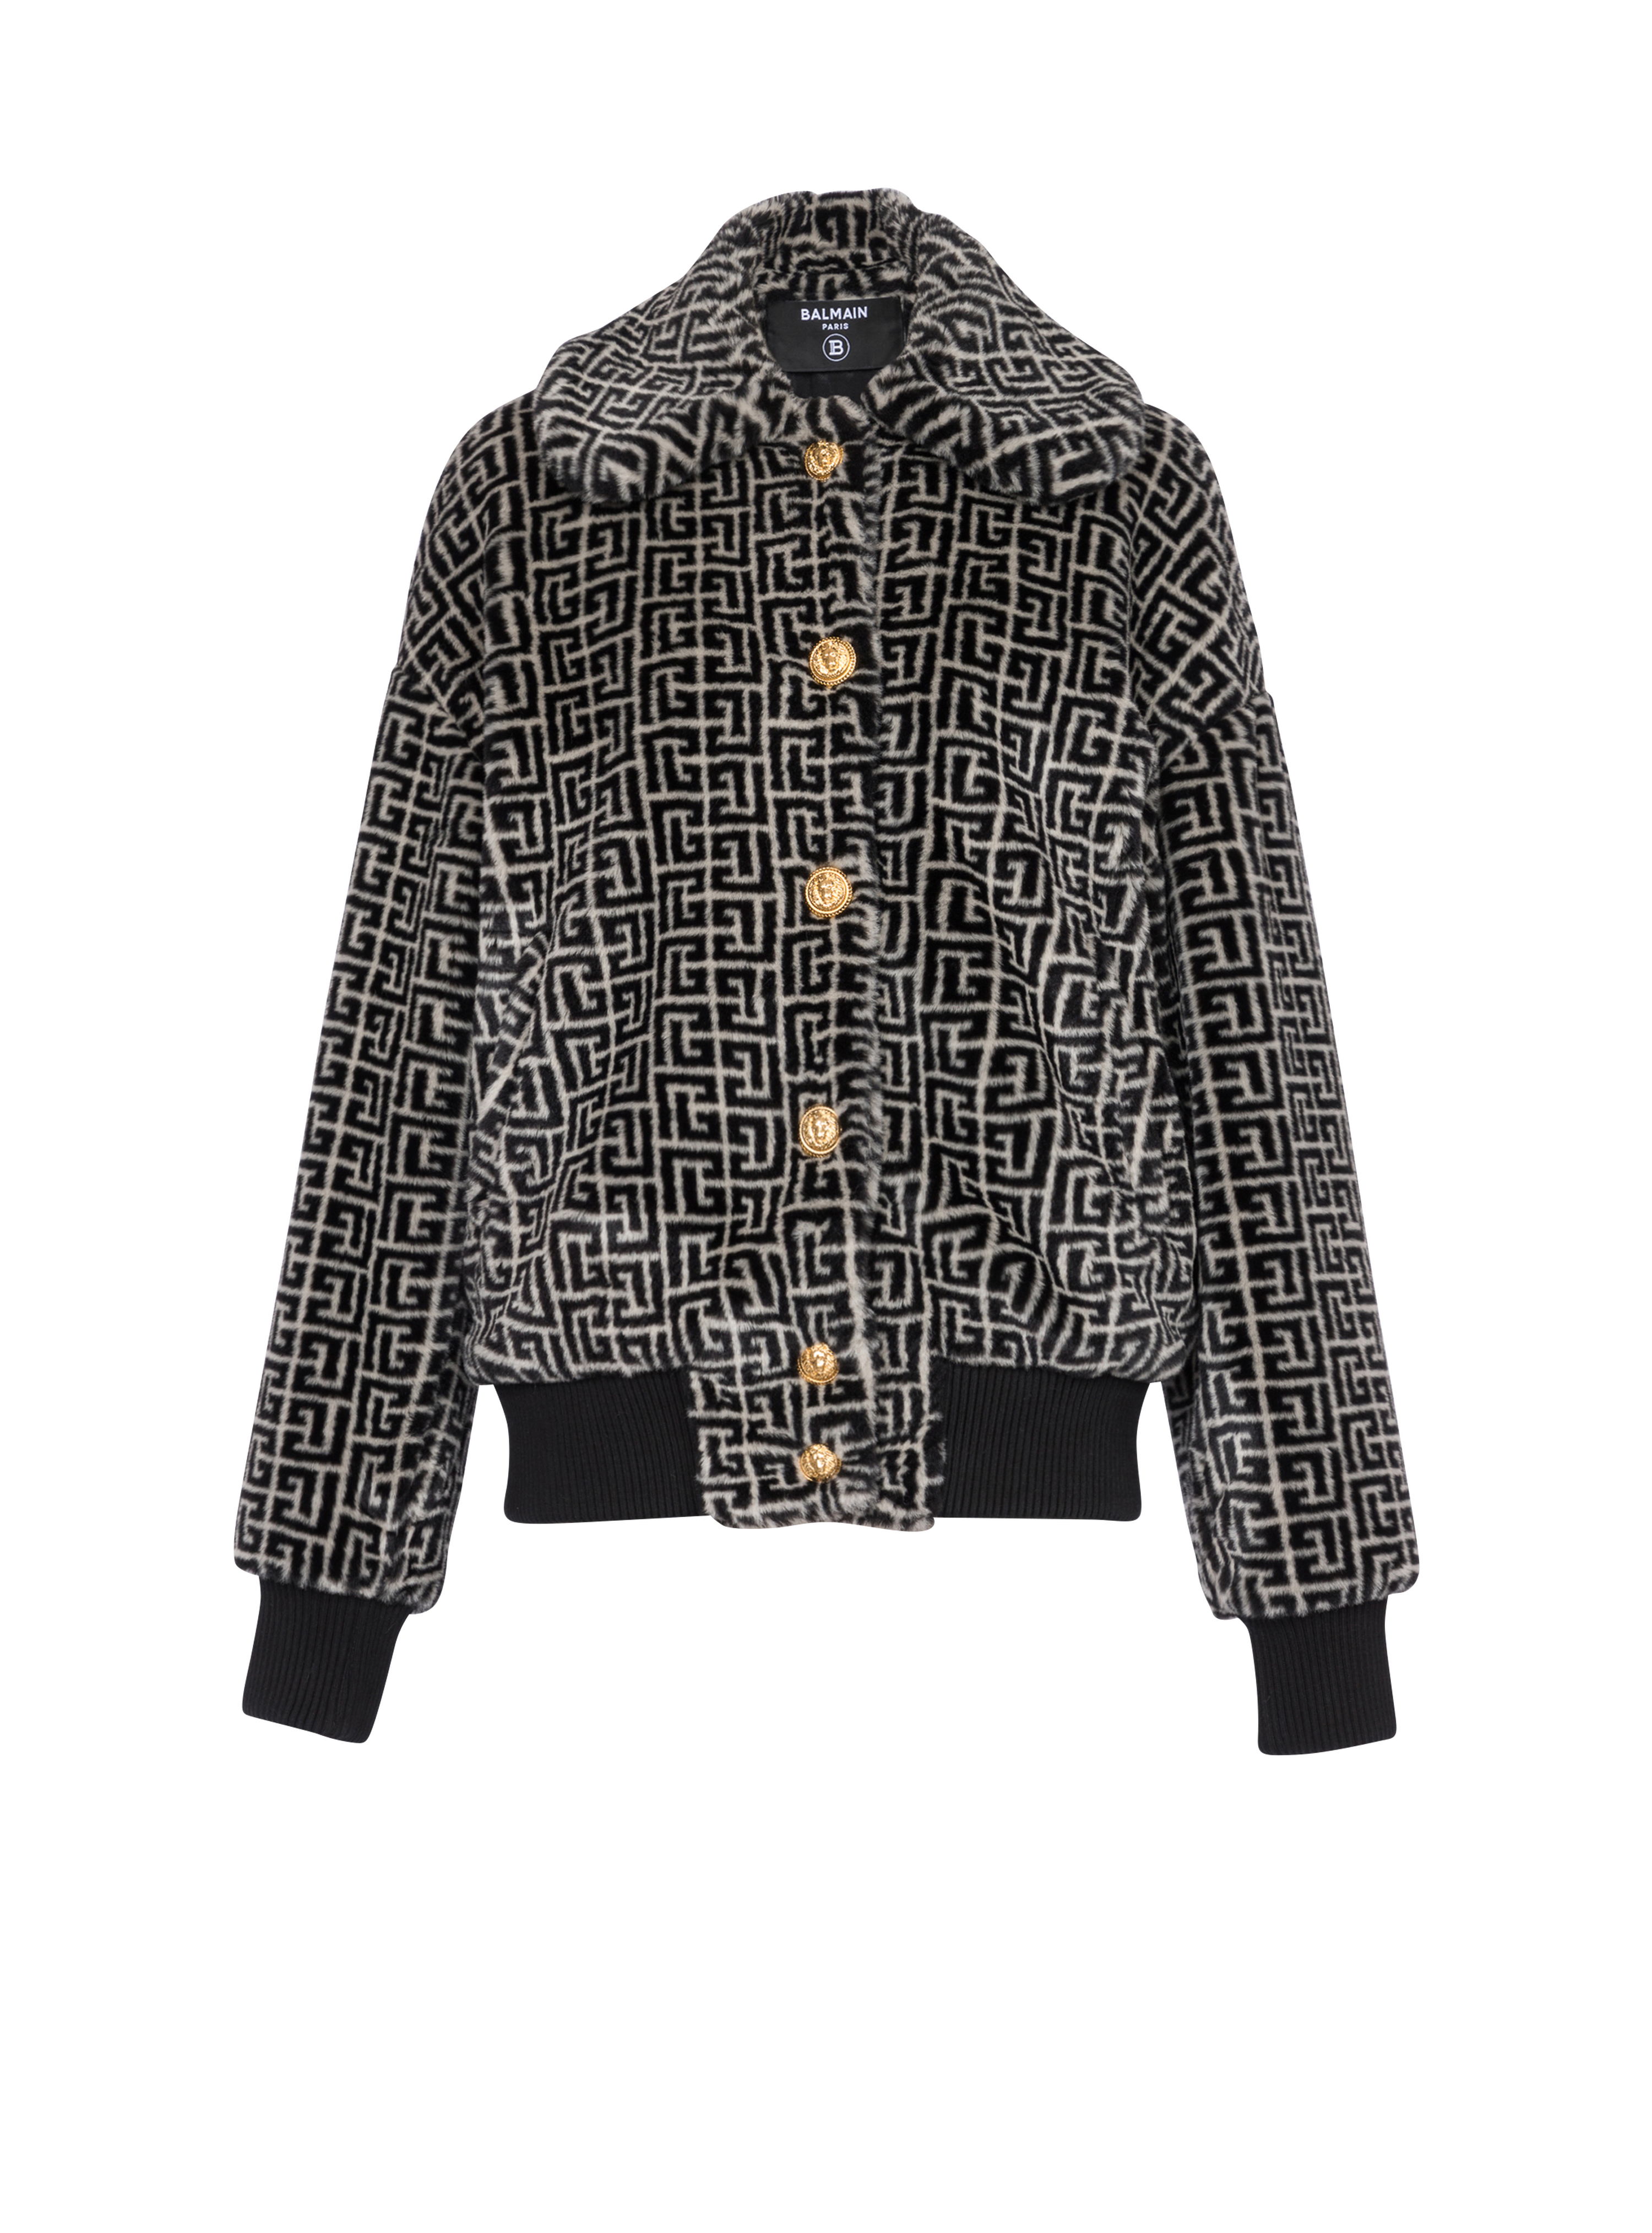 Wool jacket with monogram patterns, black